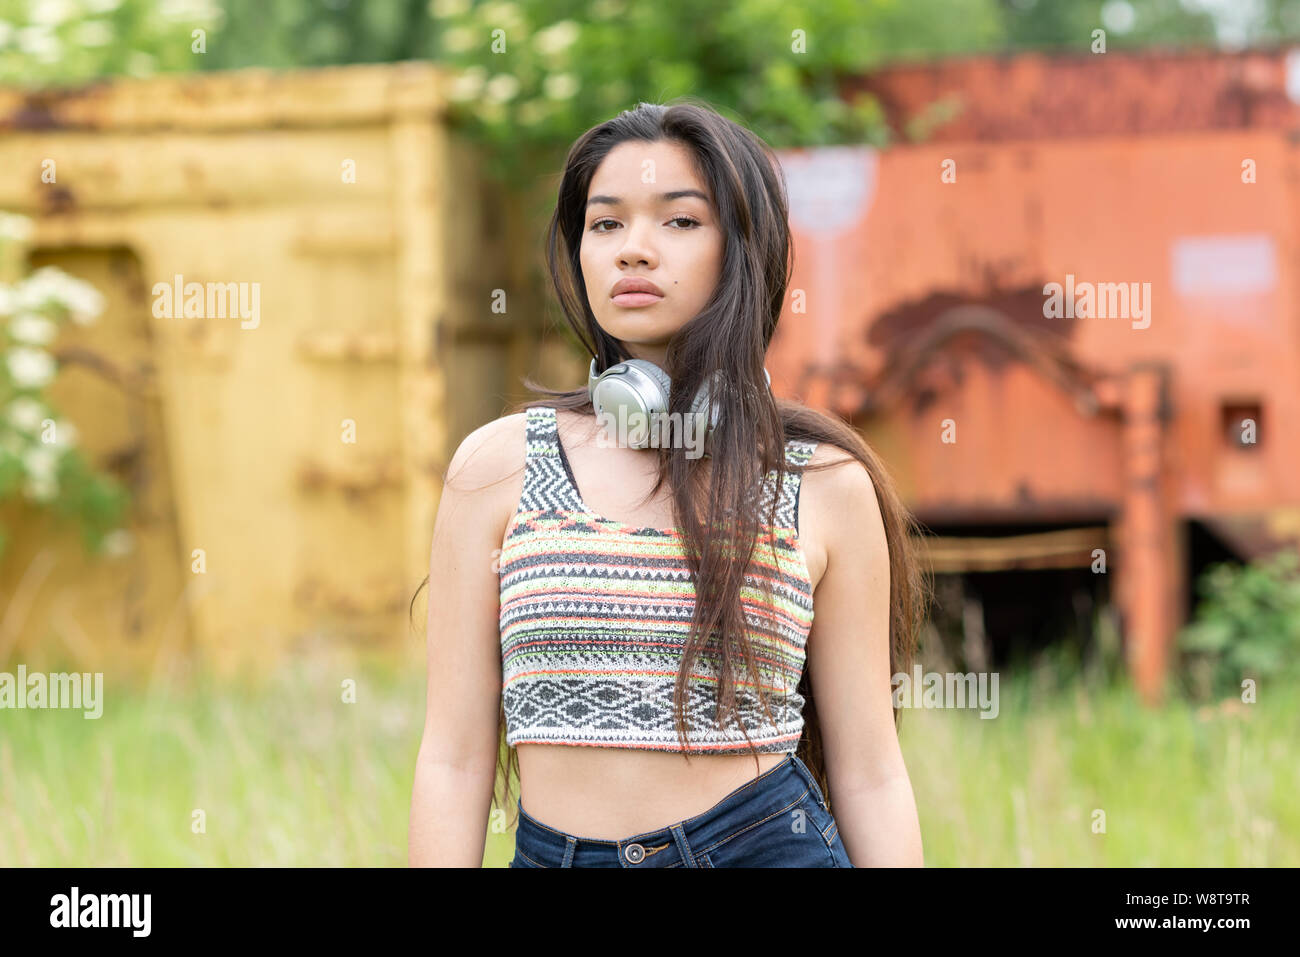 young beautiful asian woman wearing headphones outdoors Stock Photo